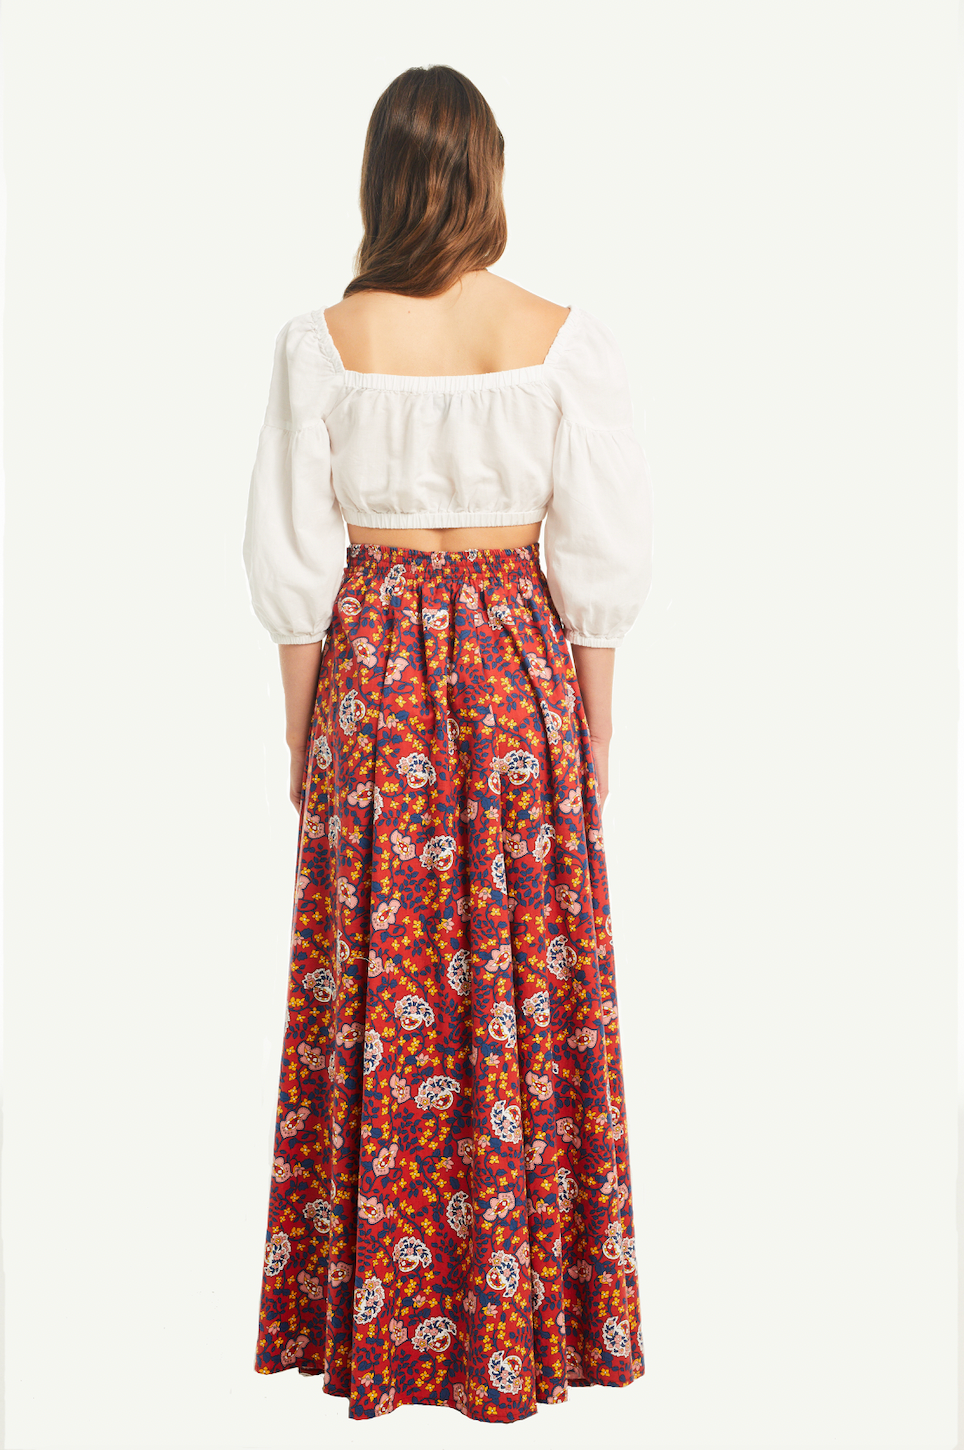 FIORDALISA - long cotton skirt in Dumbarton pattern